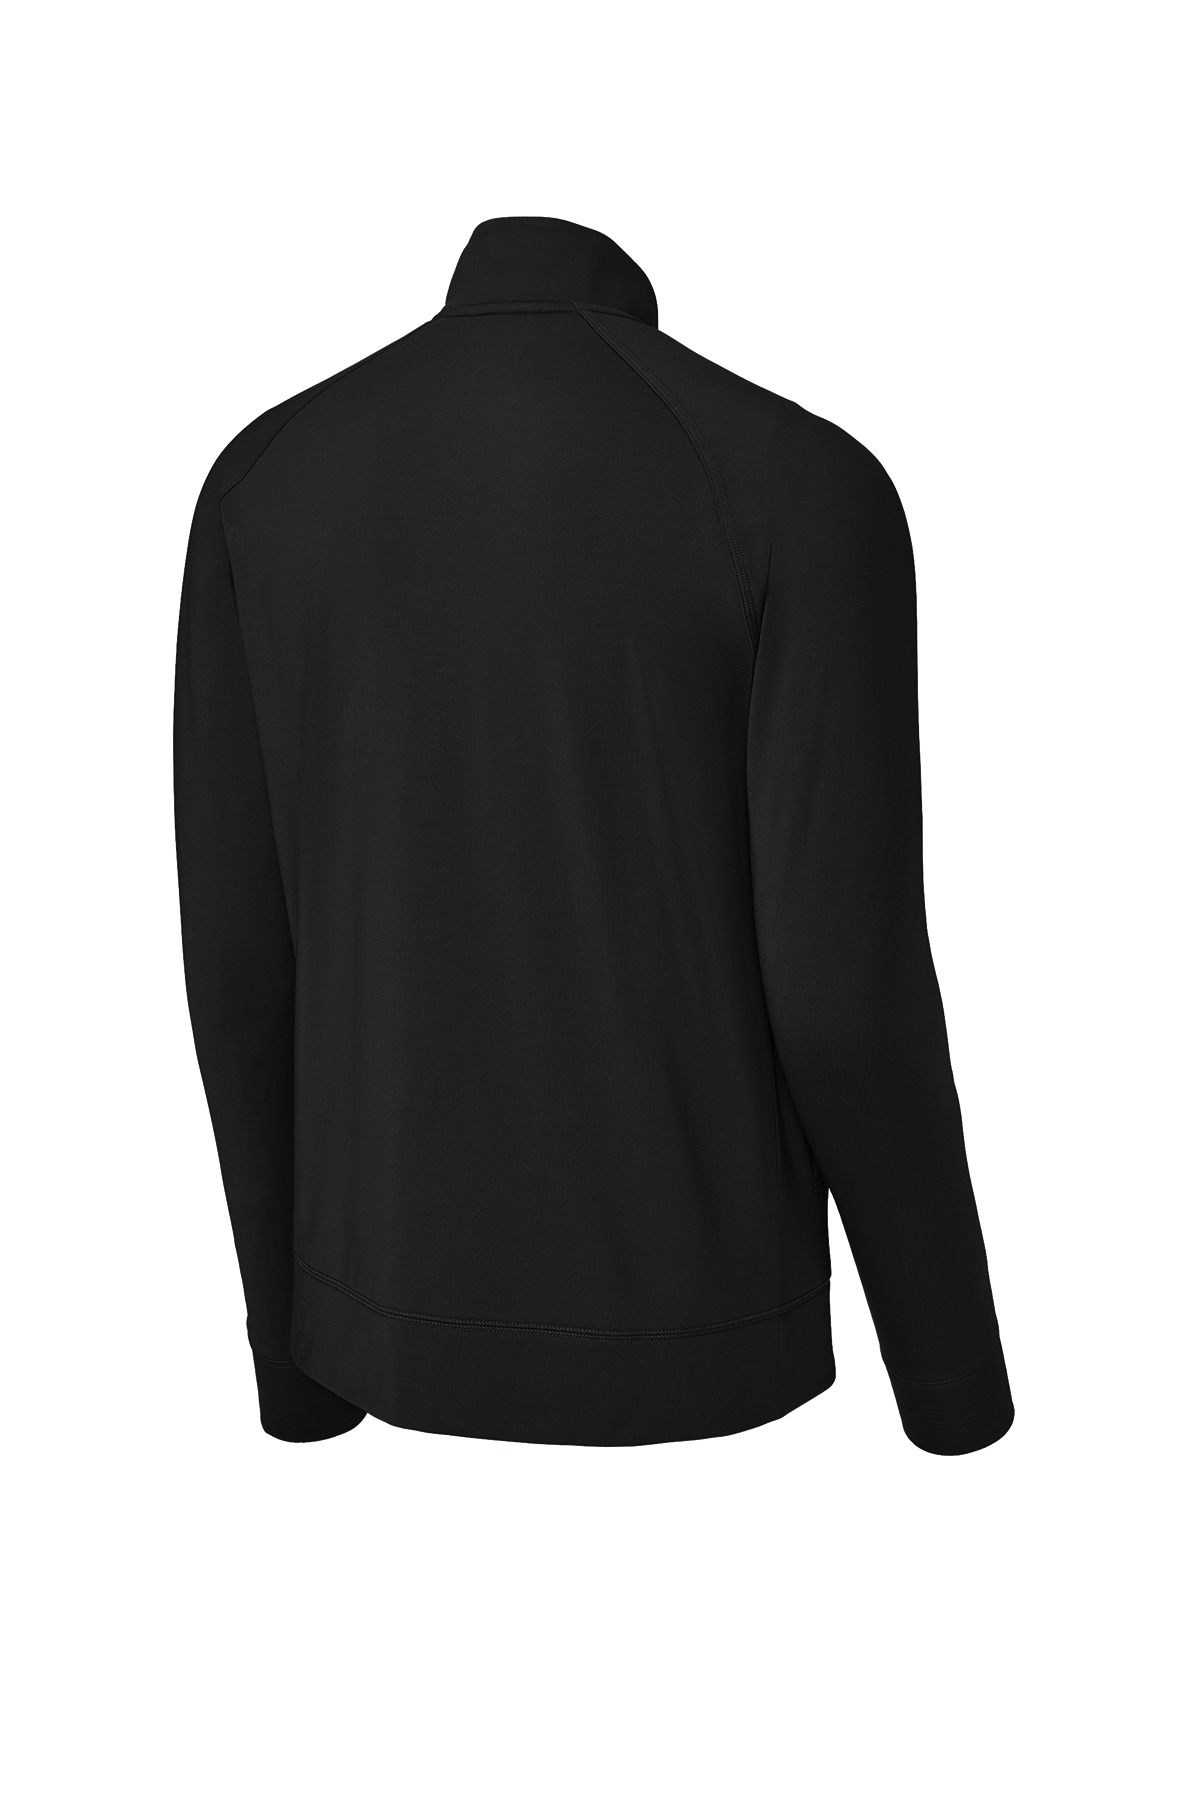 Sport-Tek Sport-Wick Stretch | Jacket Full-Zip Cadet Product SanMar 